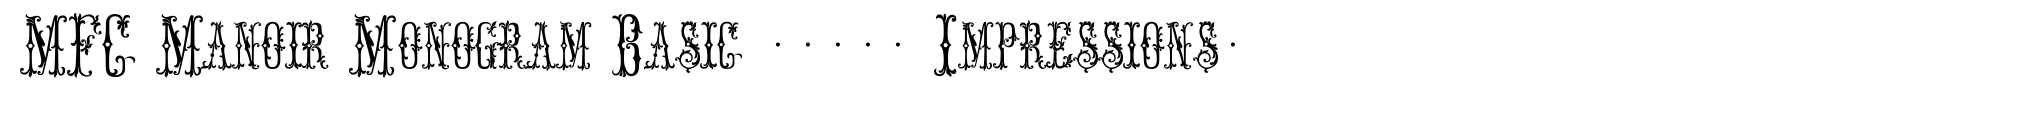 MFC Manoir Monogram Basic (1000 Impressions) image